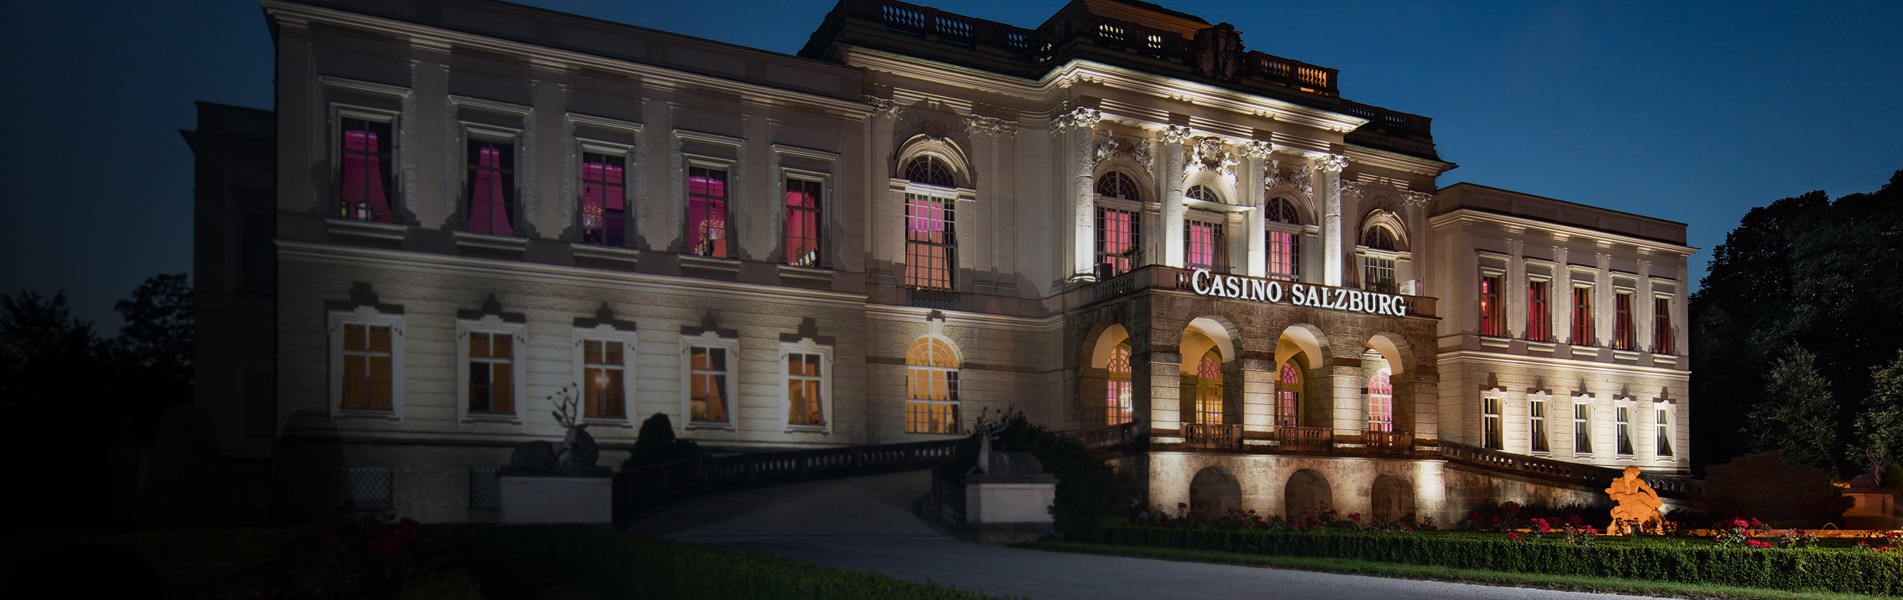 Casino Salzburg 1